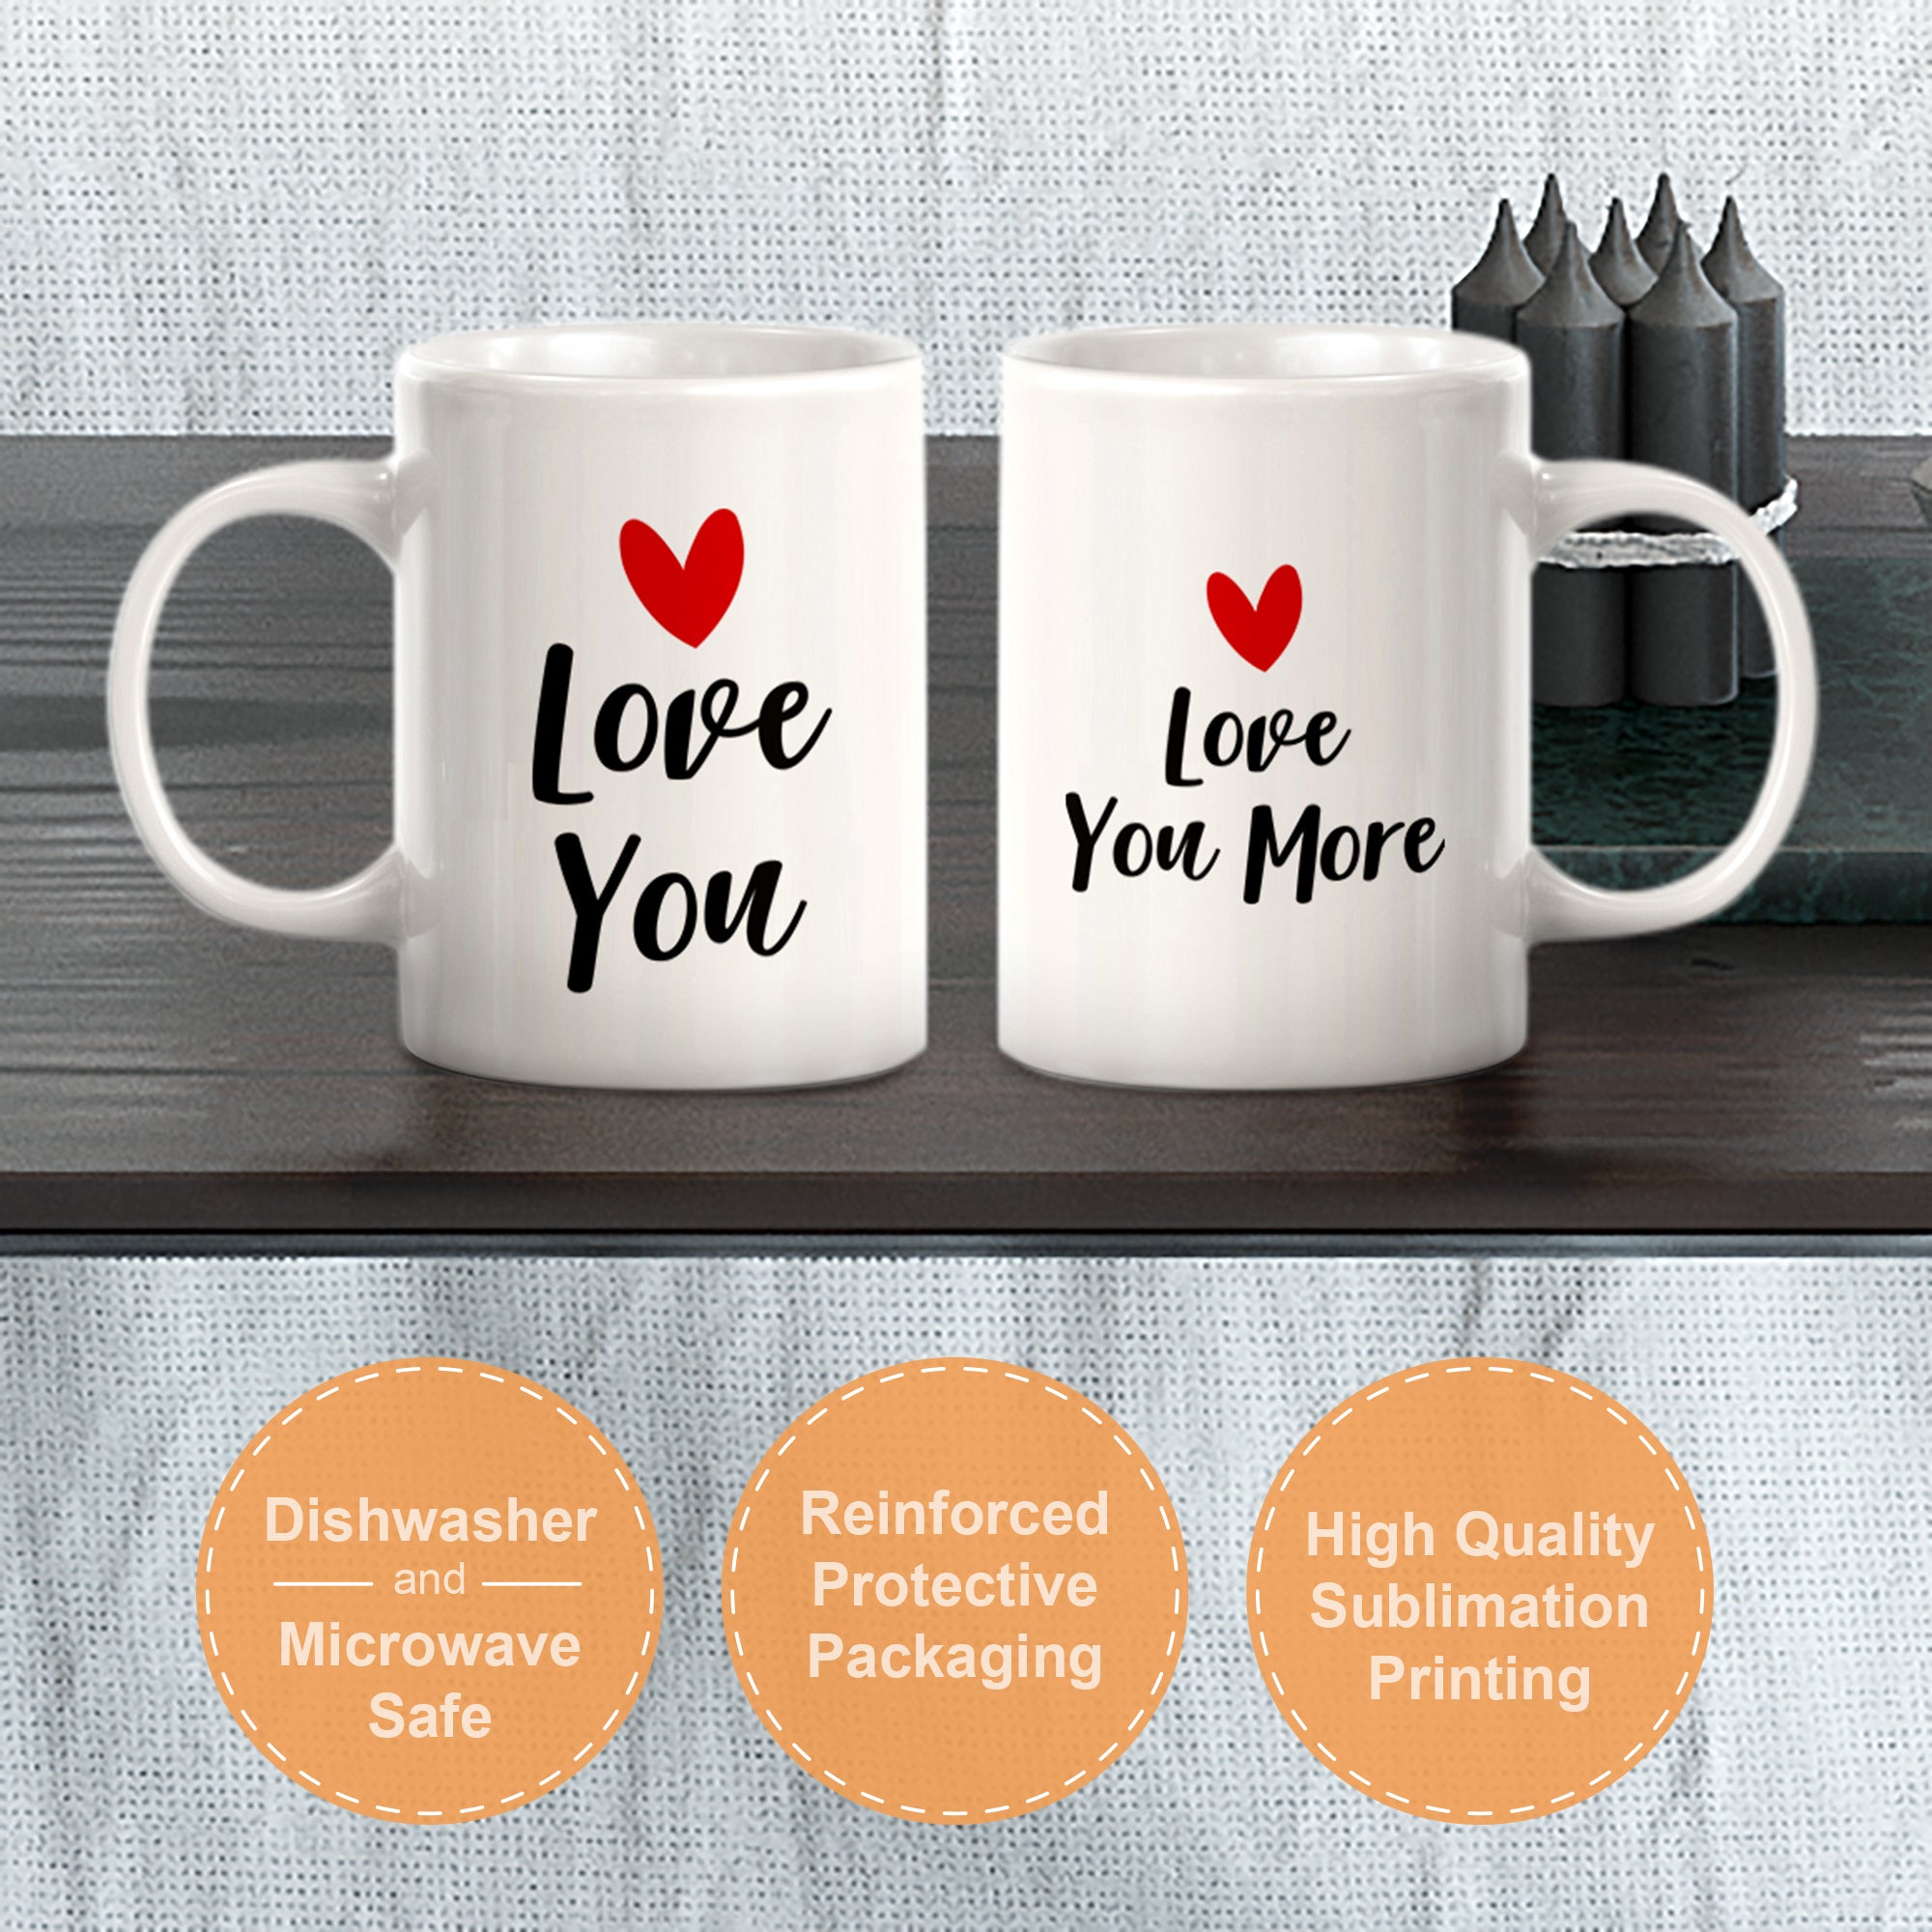 Love You / Love You More (2 Pack) Coffee Mug